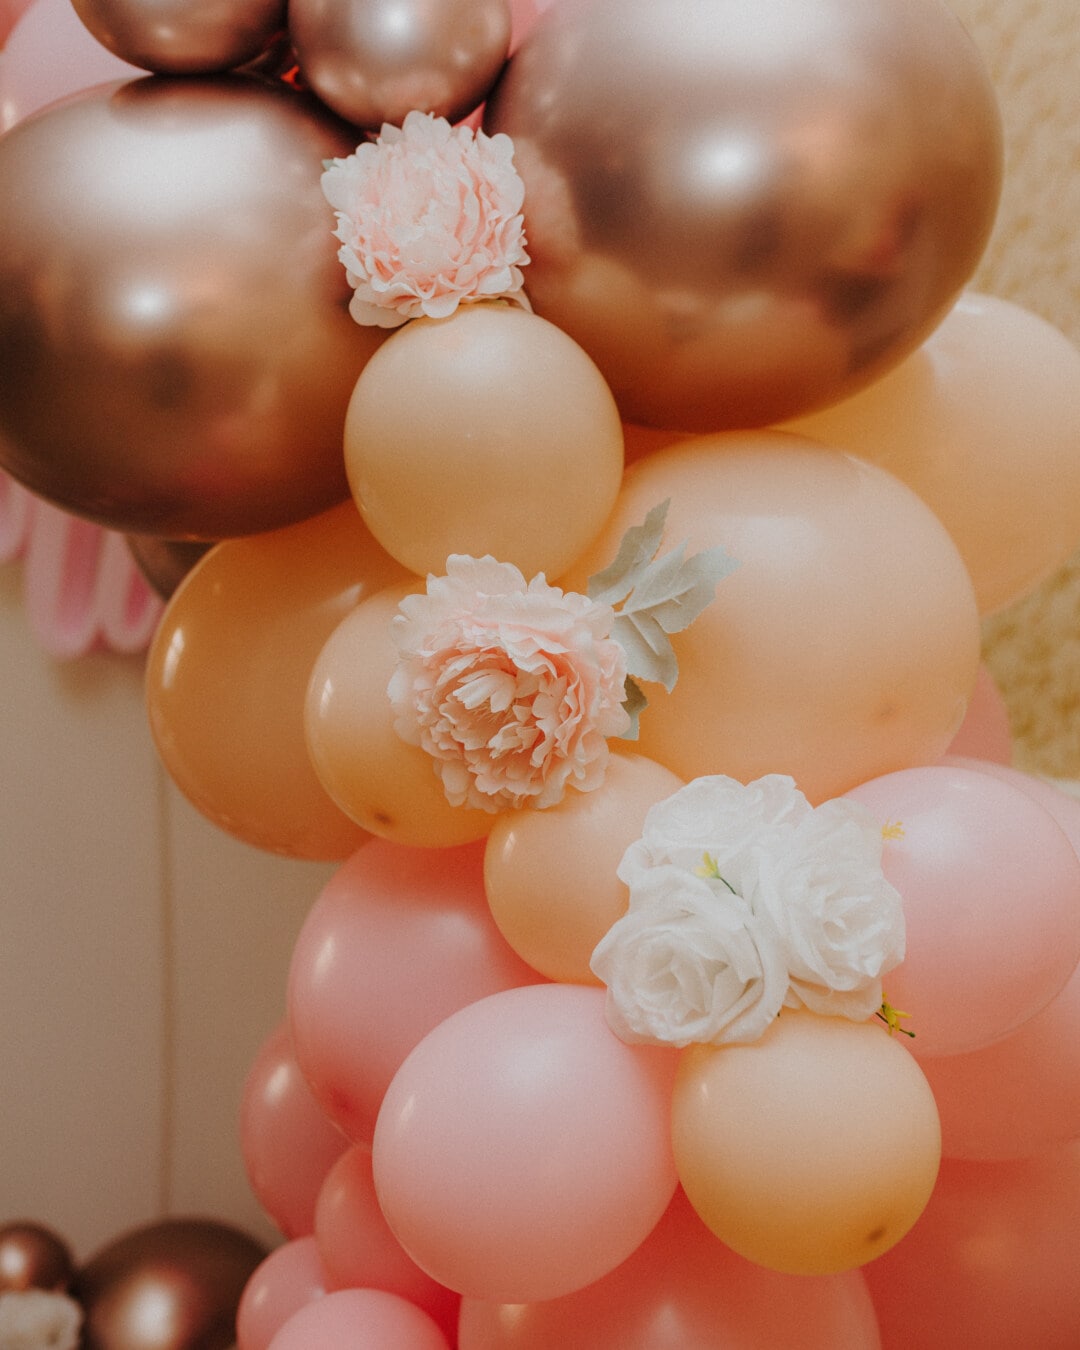 Ballon, glänzend, Helium, Rosa, Pastell, Anordnung, Blumen, Interieur-design, glänzend, hell